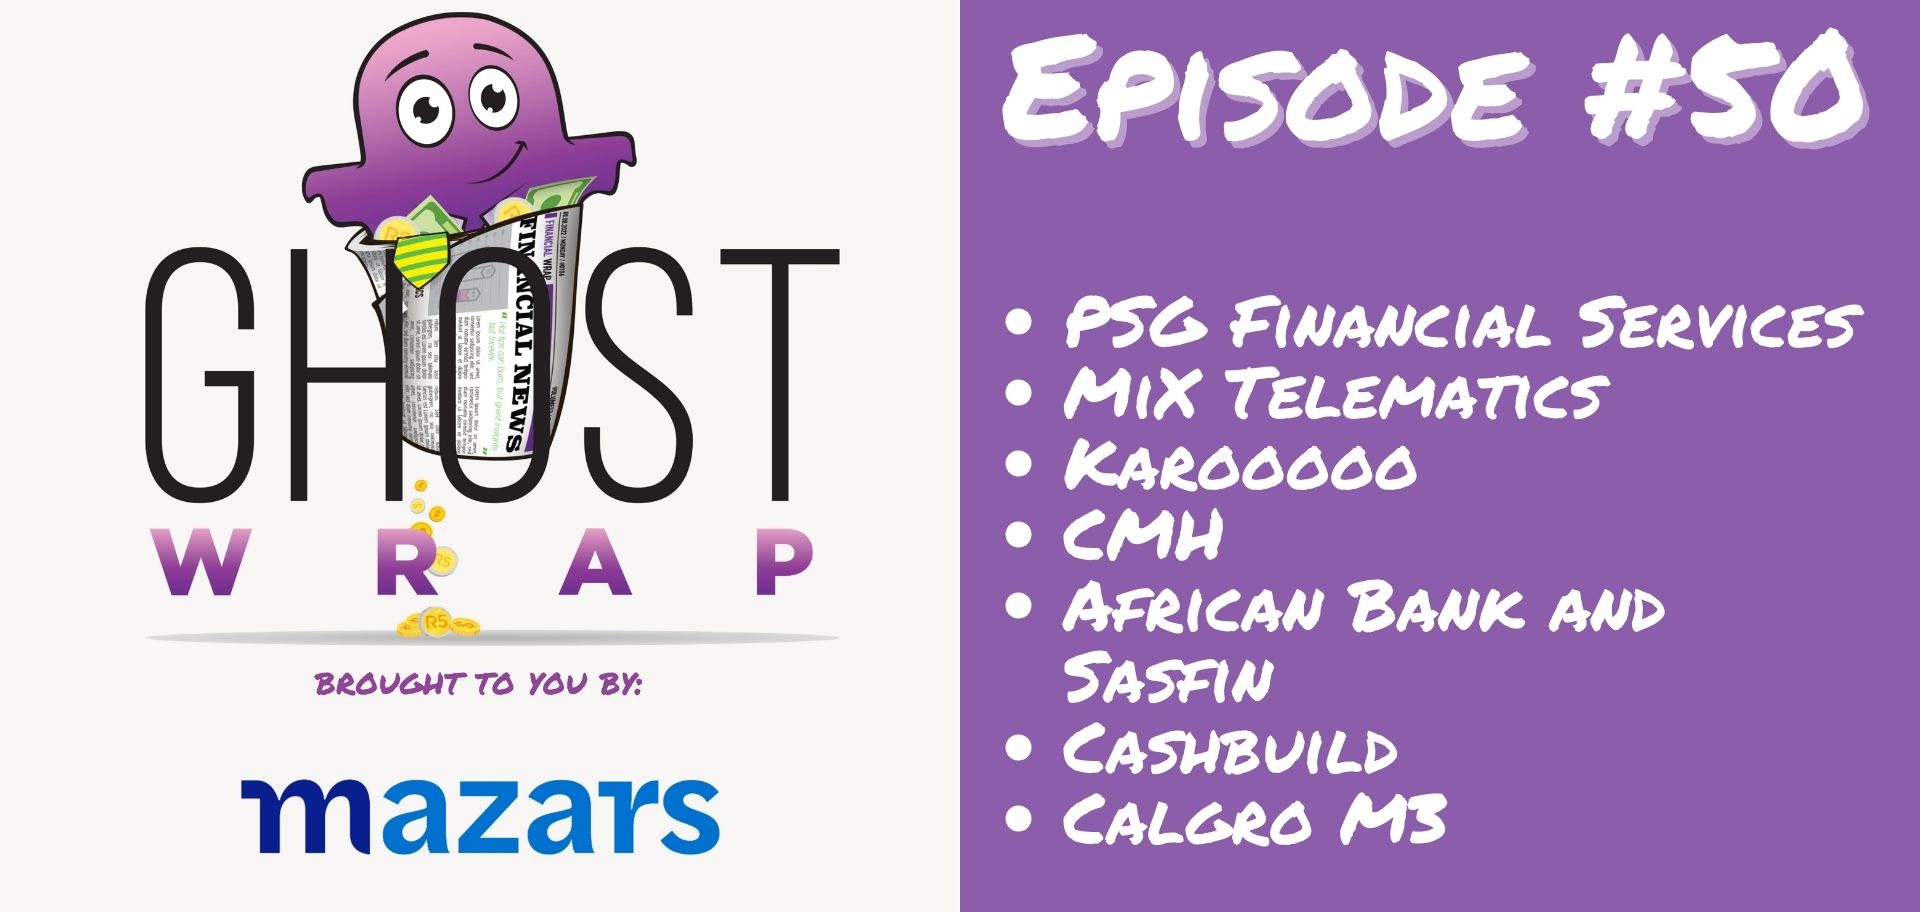 Ghost Wrap #50 (PSG Financial Services | MiX Telematics | Karooooo | CMH | African Bank and Sasfin | Cashbuild | Calgro M3)